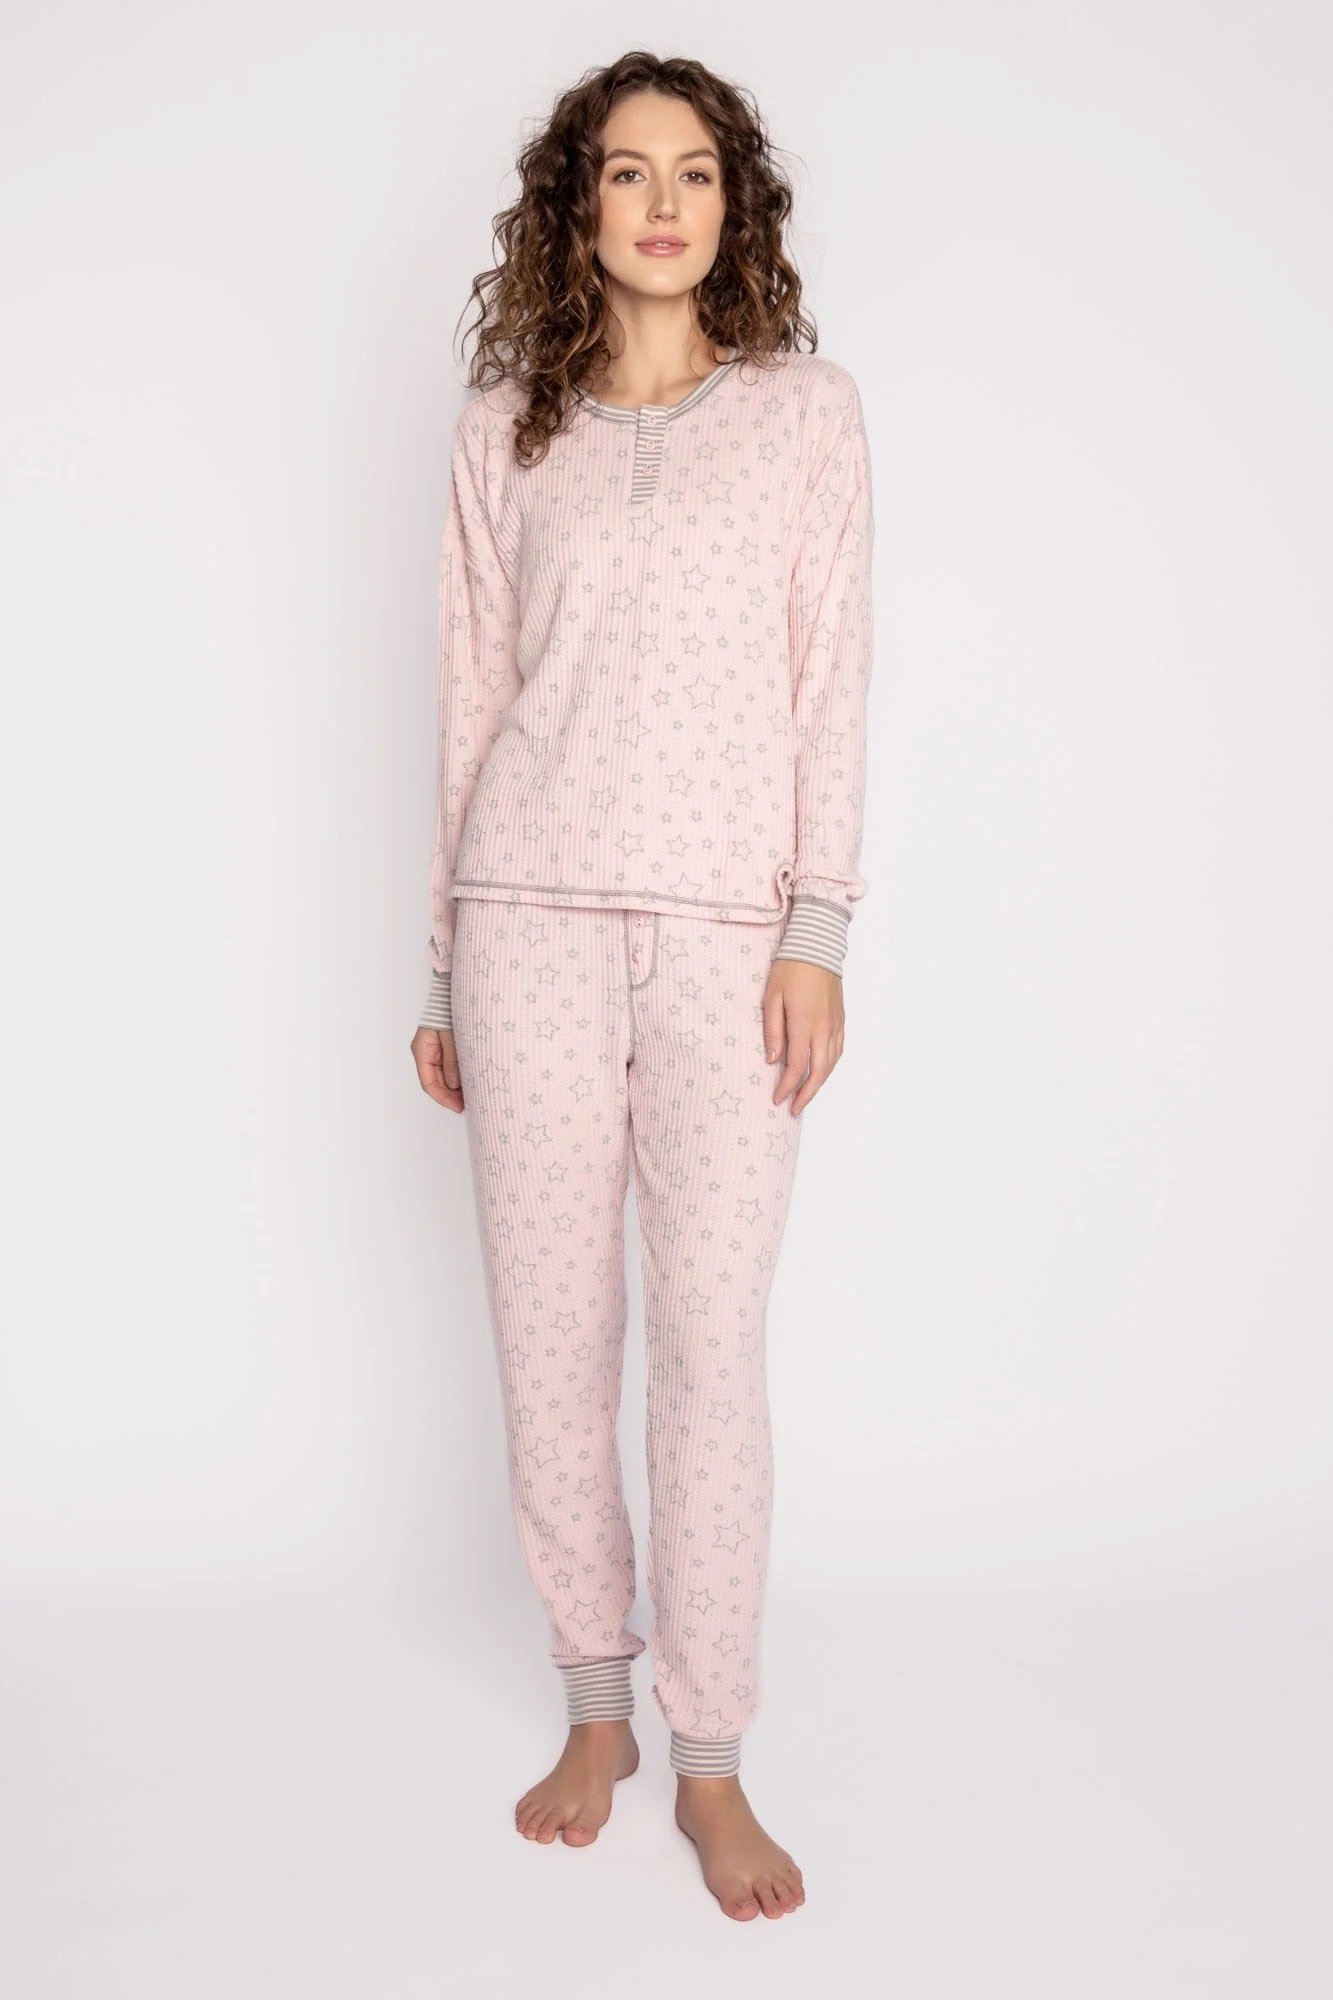 P.J. Salvage Womens 2-Tone Thermal Pajama Jogger Pants, Pink, X